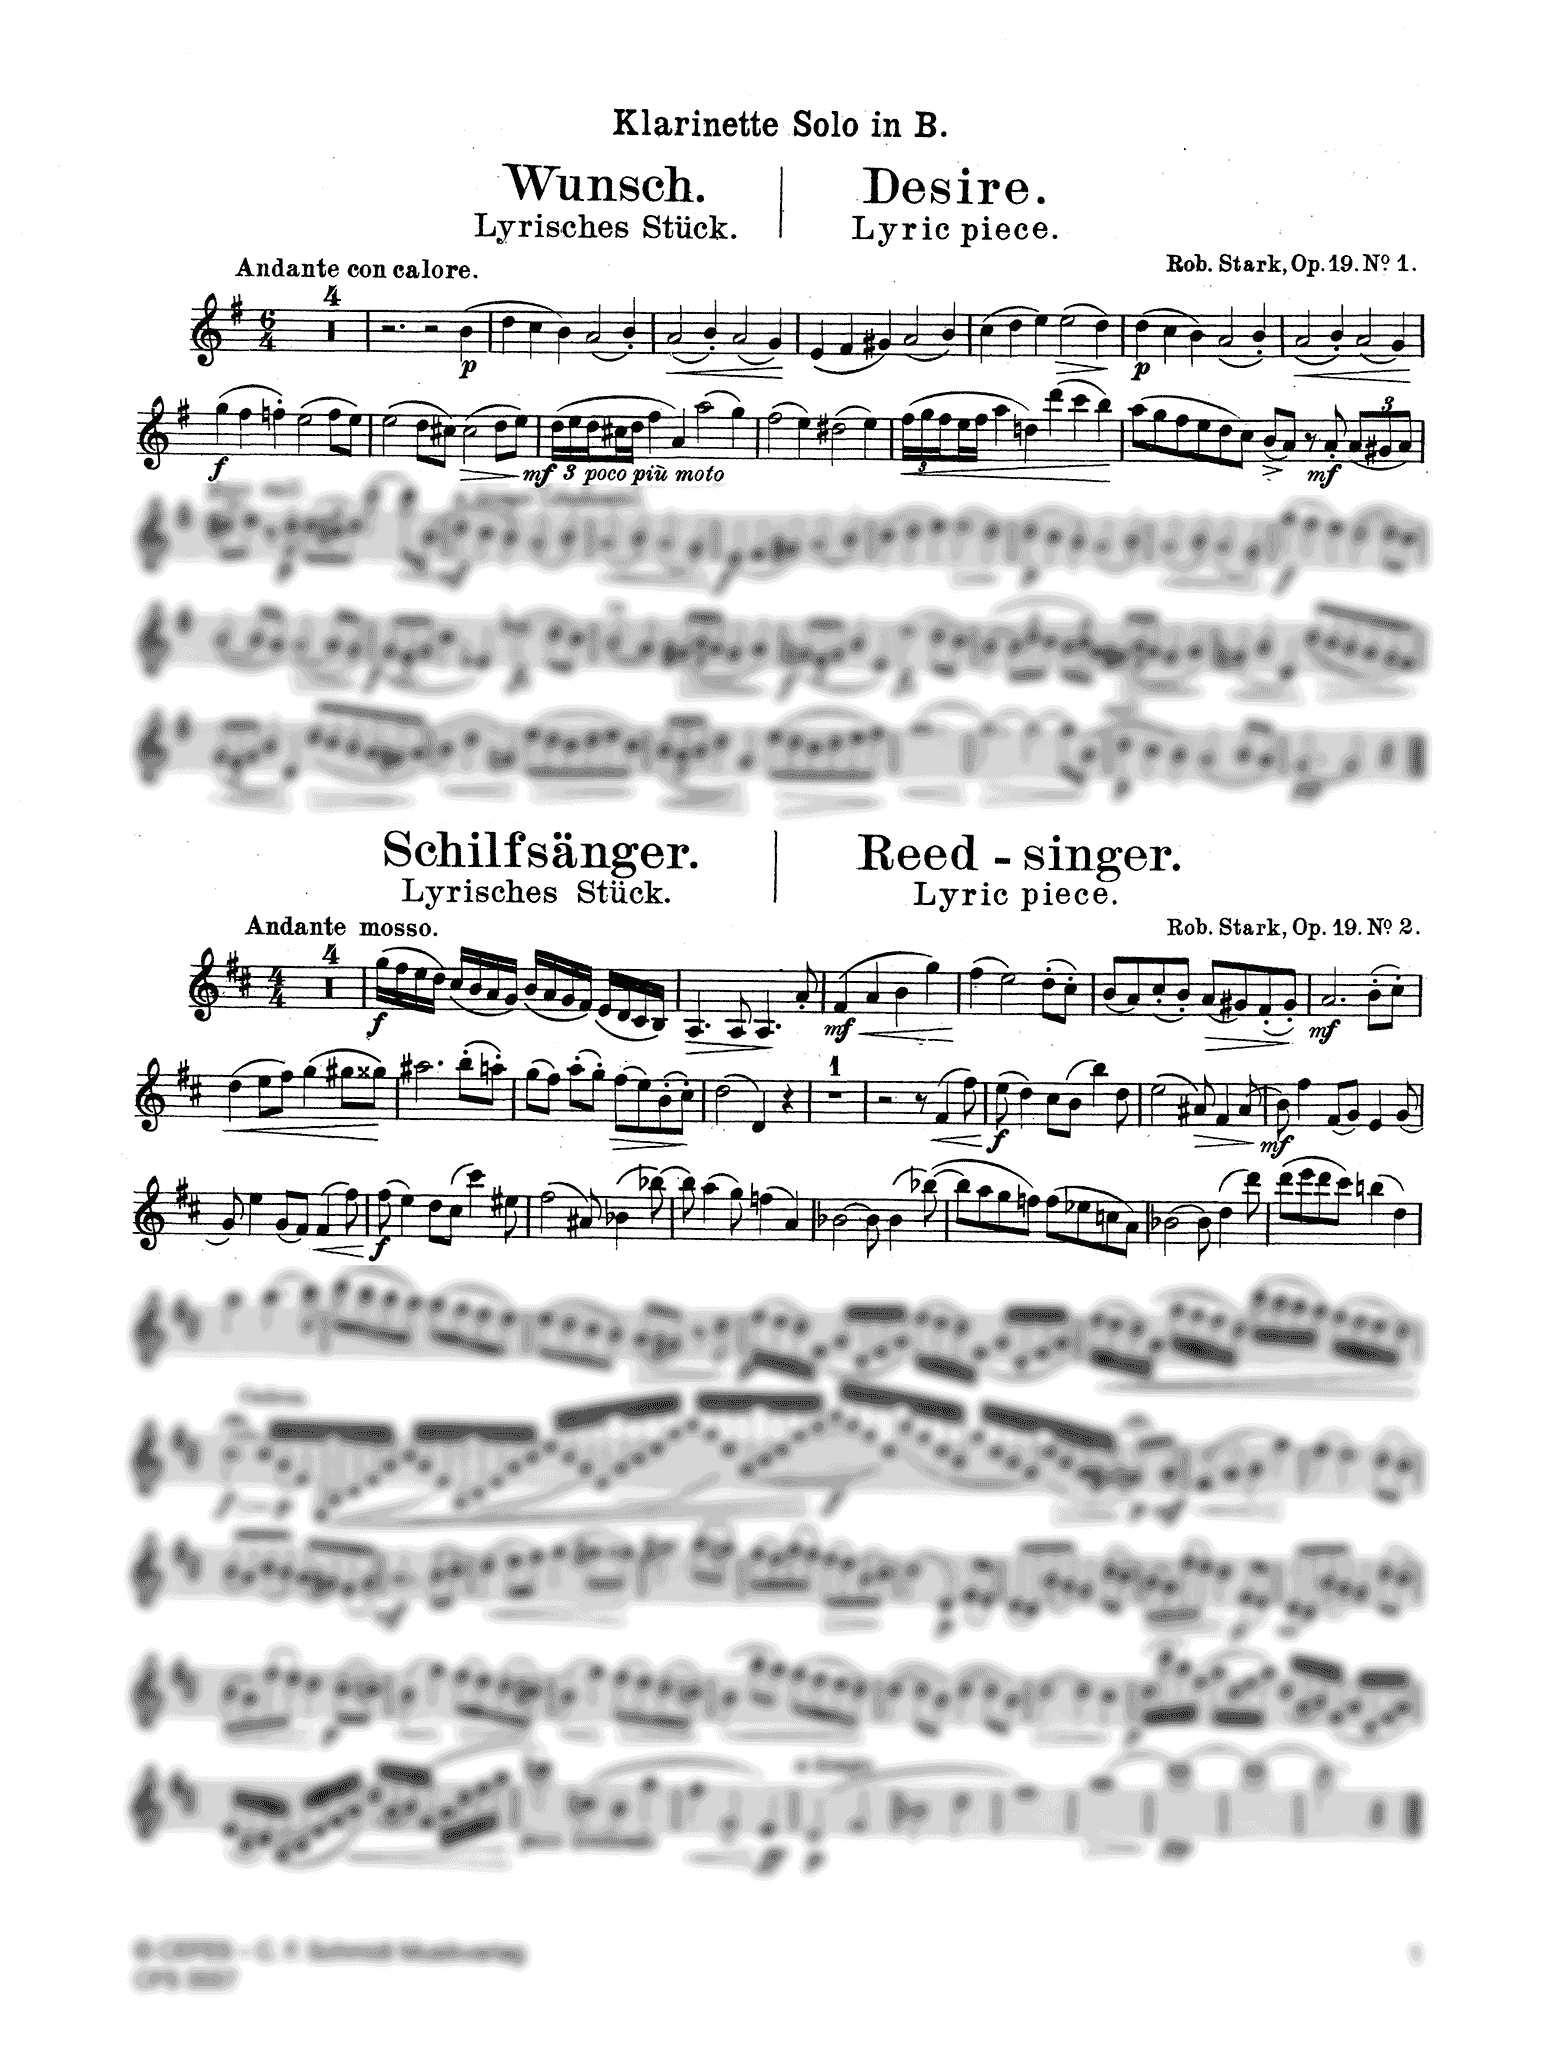 Stark Lyric Pieces, Op. 19 Nos. 1 & 2 solo part